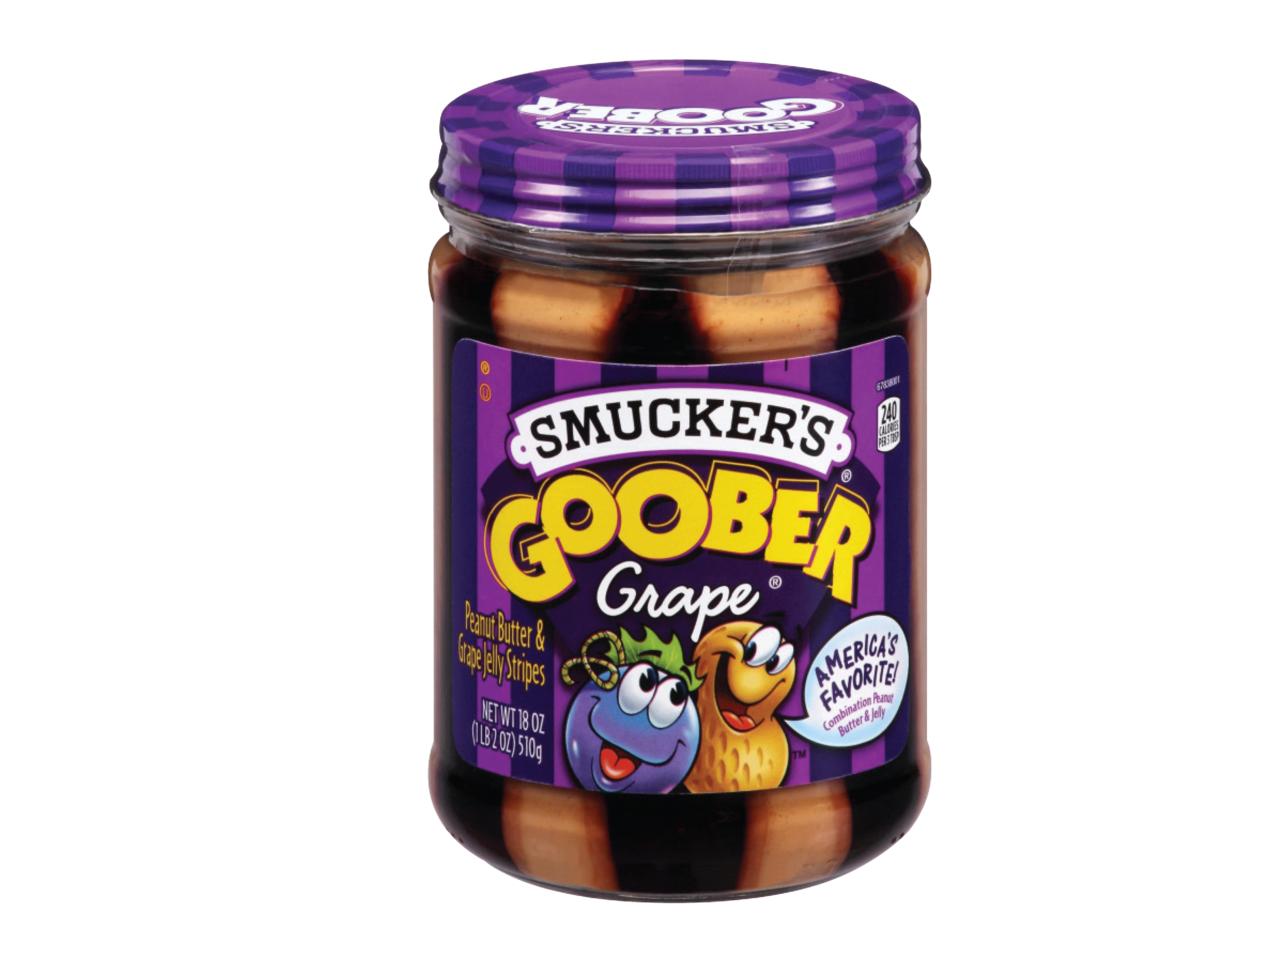 Smucker's Goober Grape Peanut Butter & Jelly